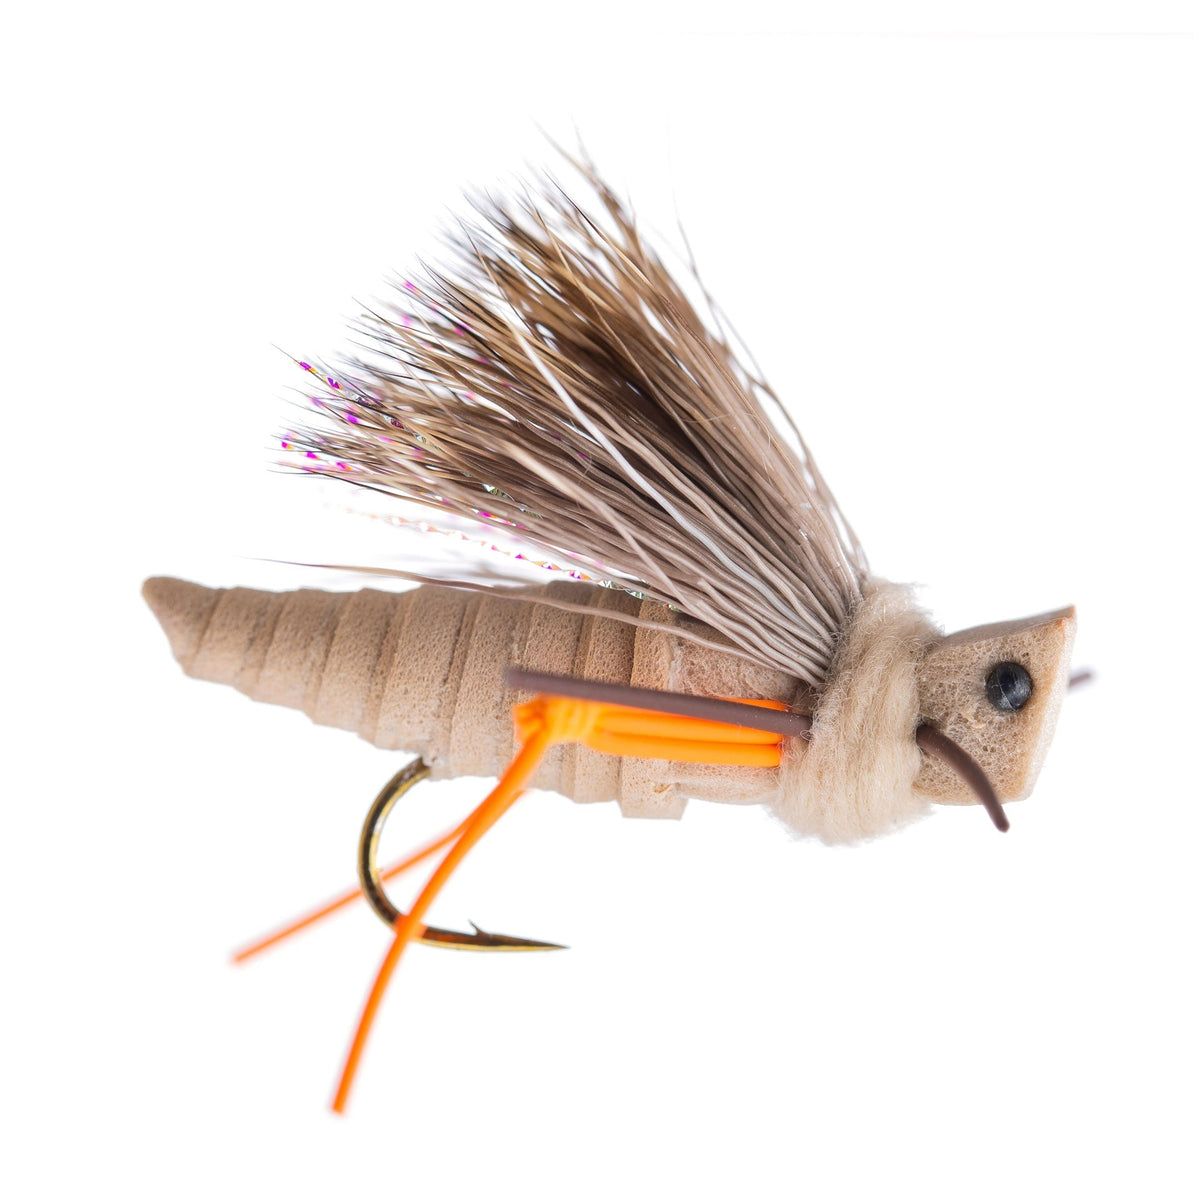  yazhida 12pcs Bionic Grasshopper Dry Fly Fishing  Flies昆虫疑似餌釣りルアーCarp Trout Muskie : Sports & Outdoors